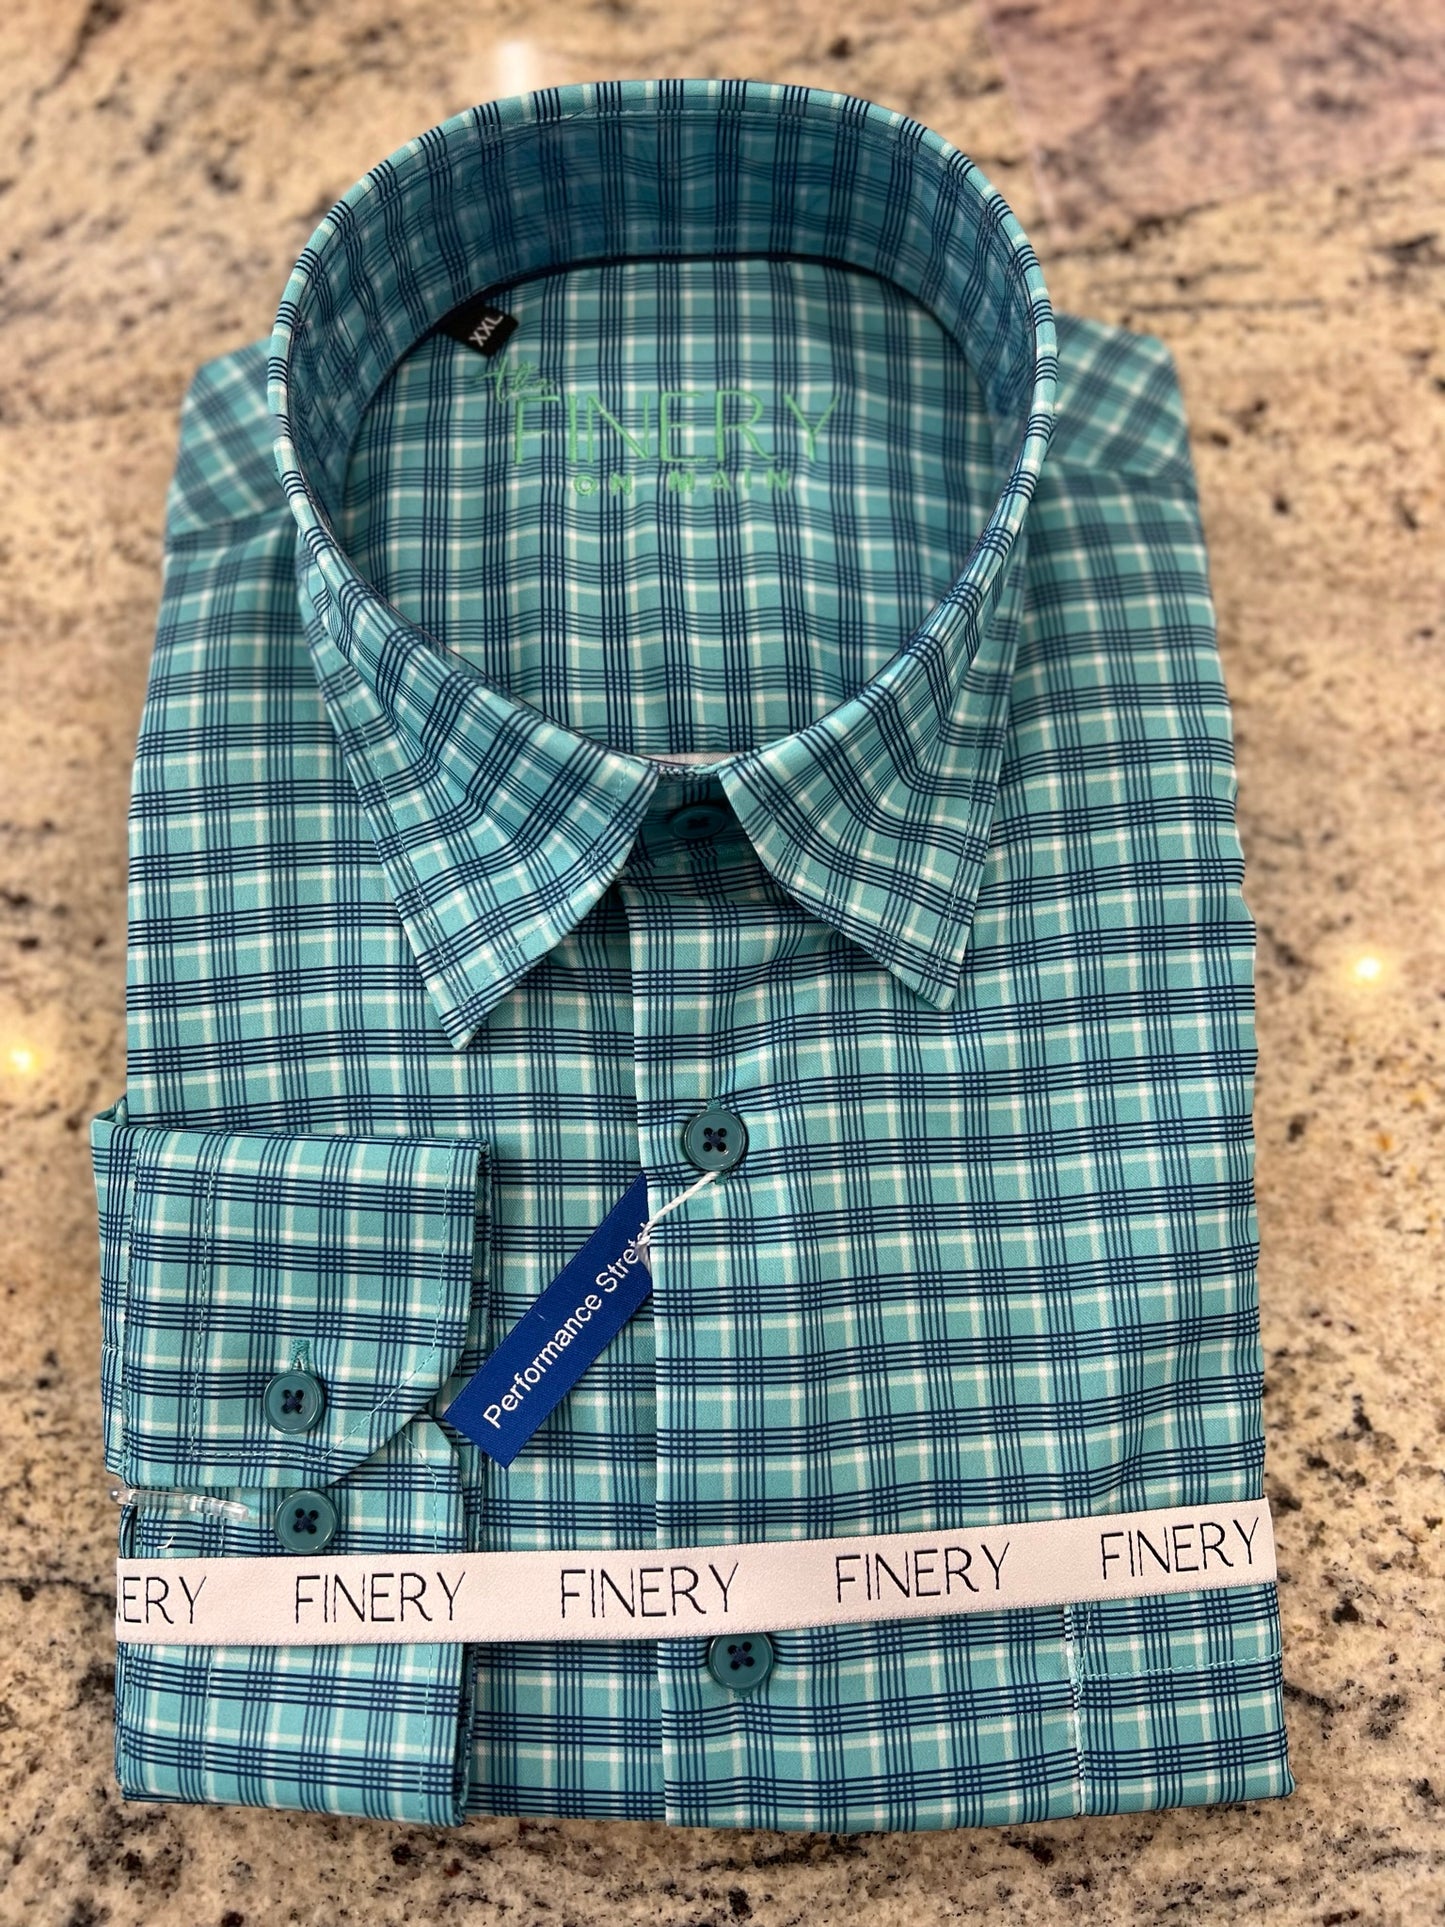 The Finery Bay Dress Shirt